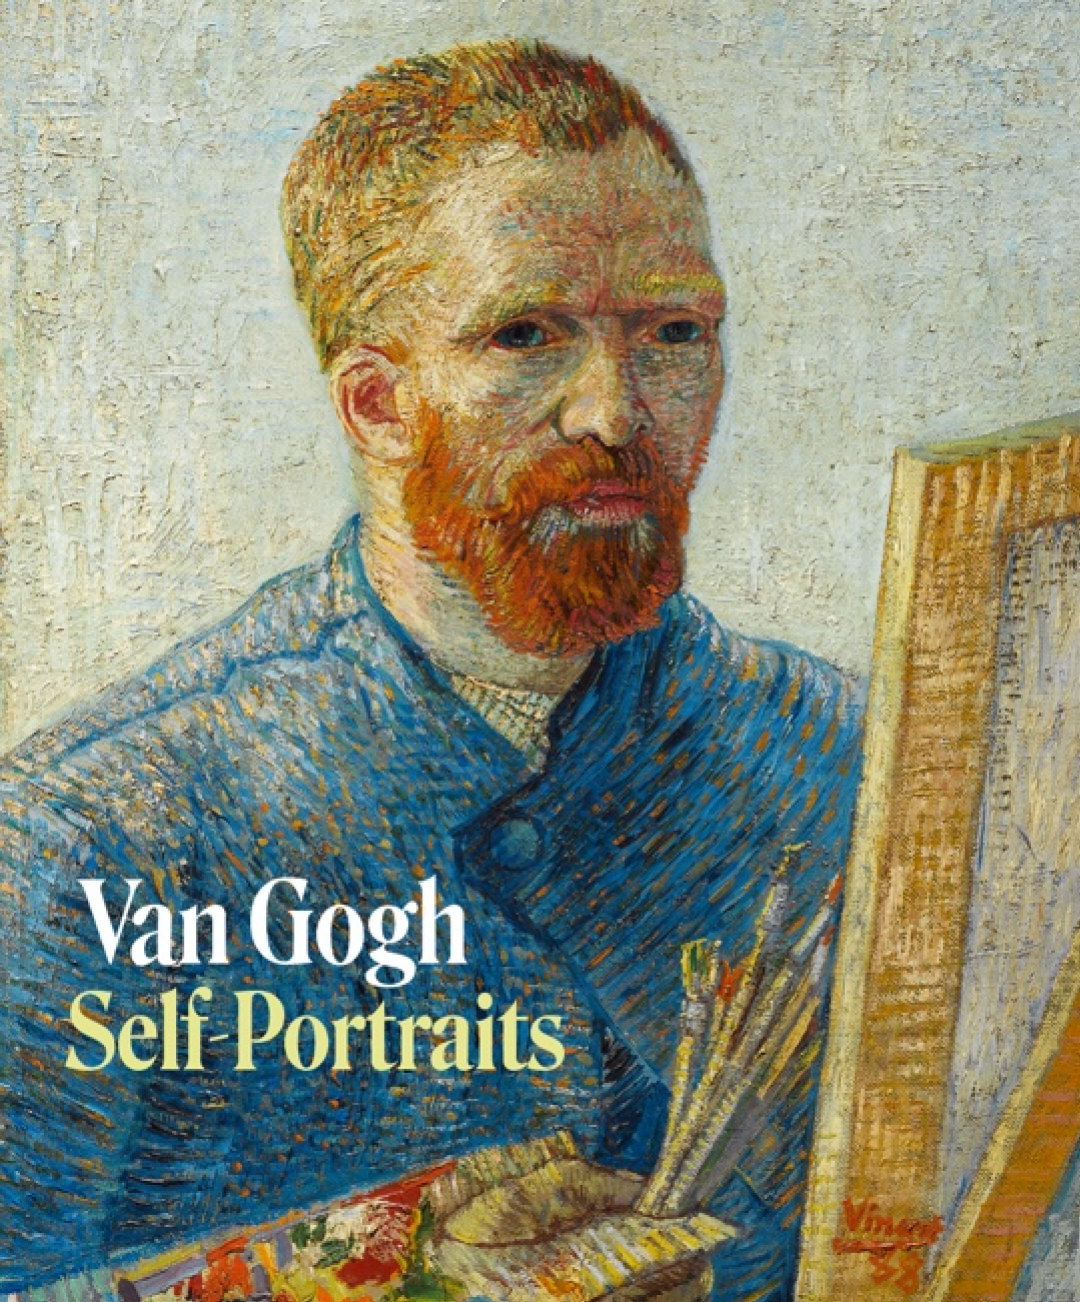 Van Gogh. Self-portraits: exhibition 3 febbraio – 8 maggio, Il Courtauld institute of art, London, United Kingdom | Arthive